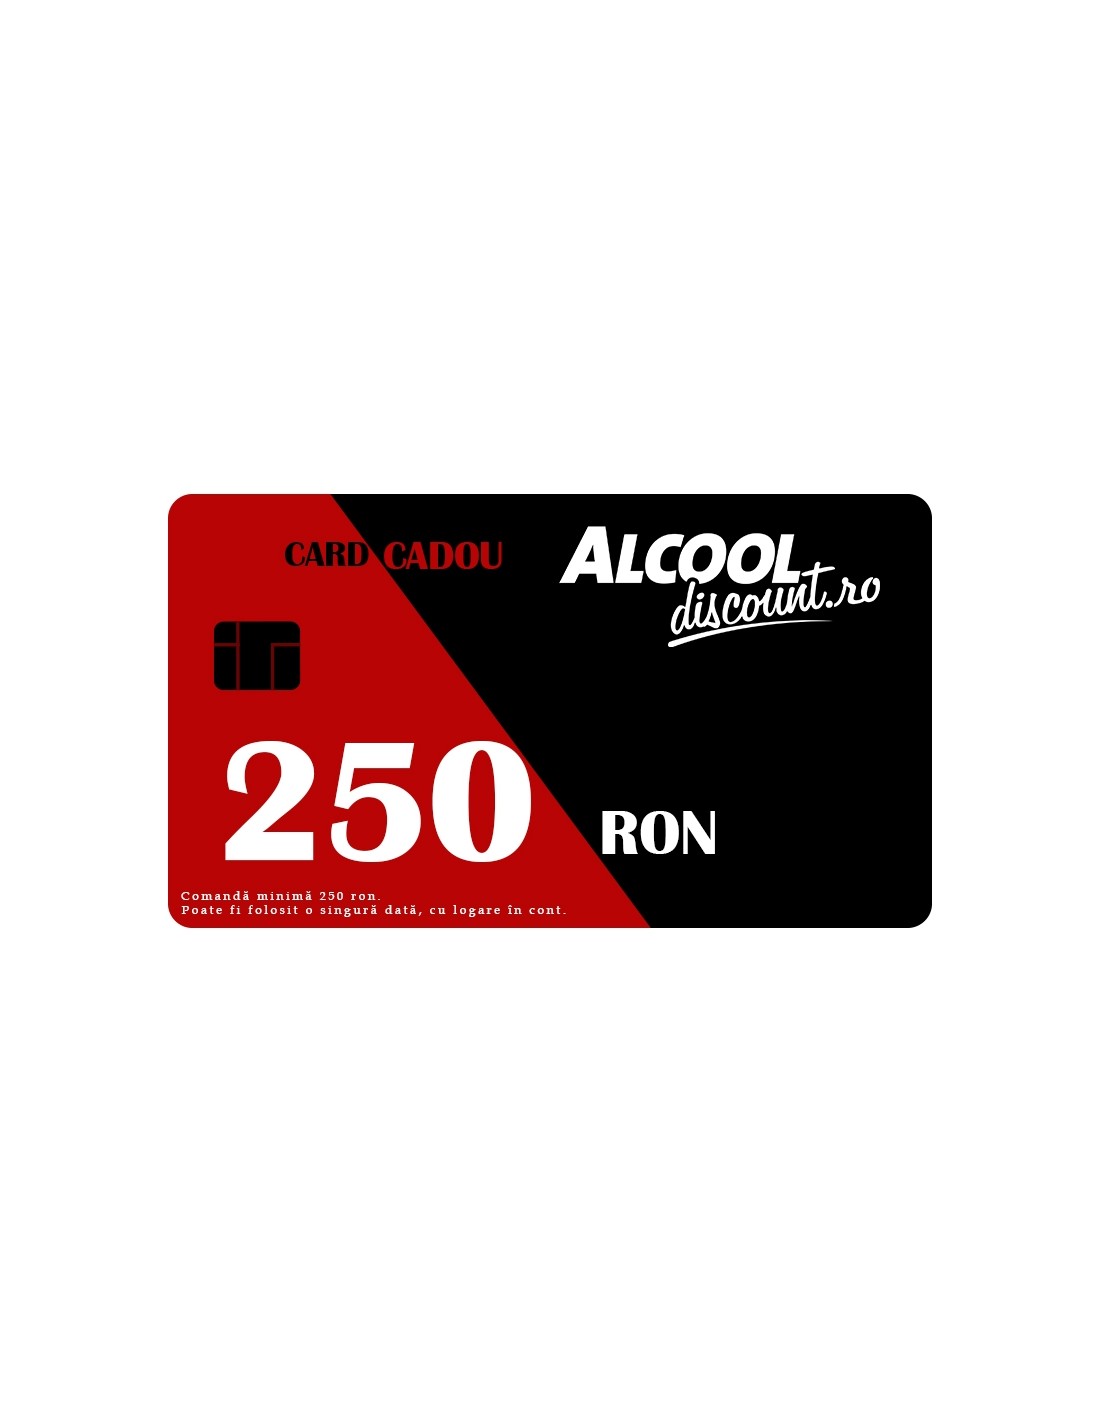 CARD CADOU 250 RON alcooldiscount.ro